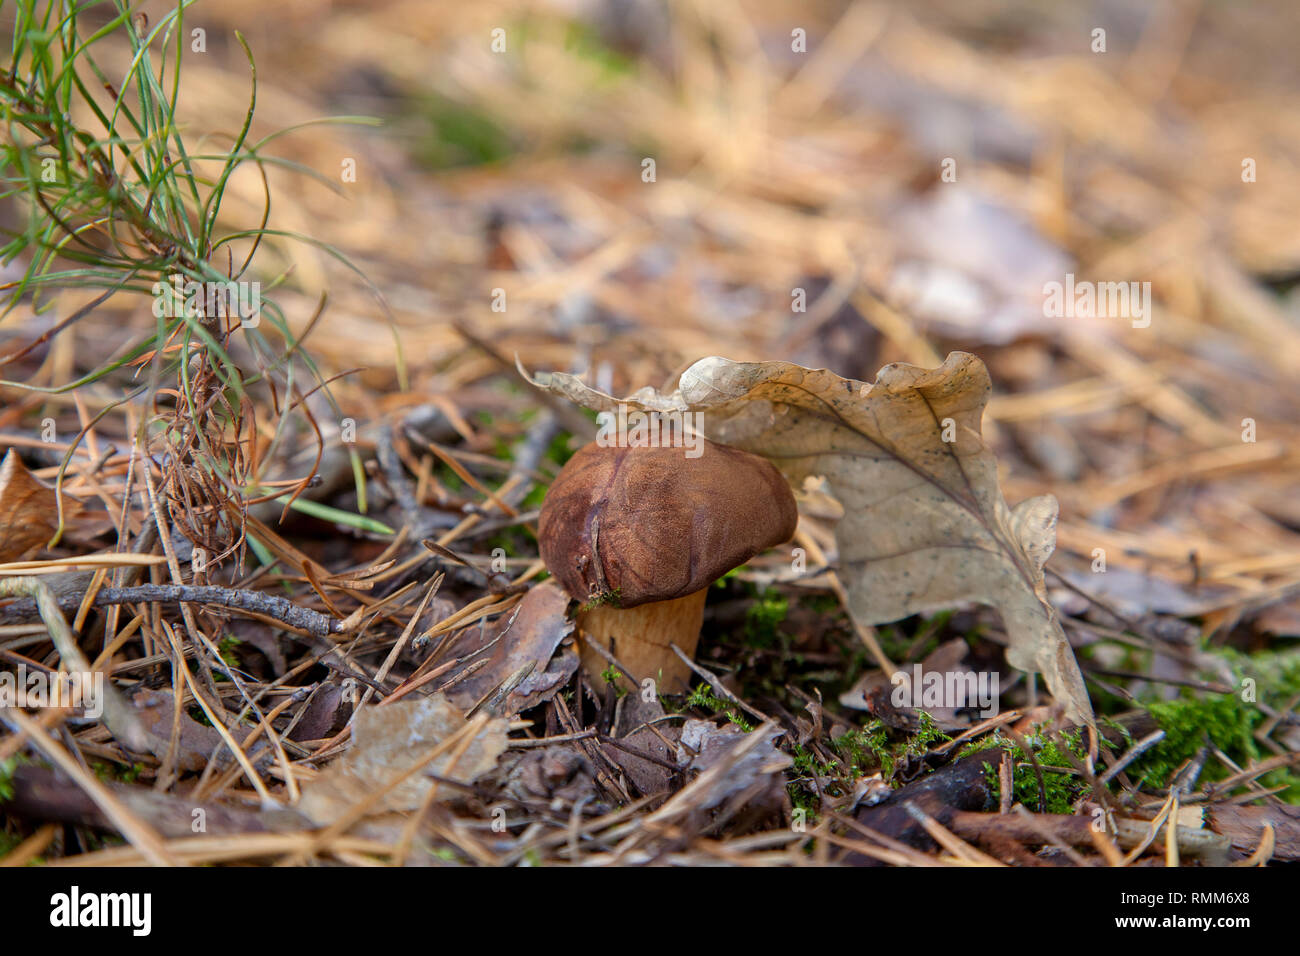 Edible wild mushroom with chestnut color cap and dry leaf on it in an autumn pine forest. Bay bolete  known as imleria badia or boletus badius mushroo Stock Photo